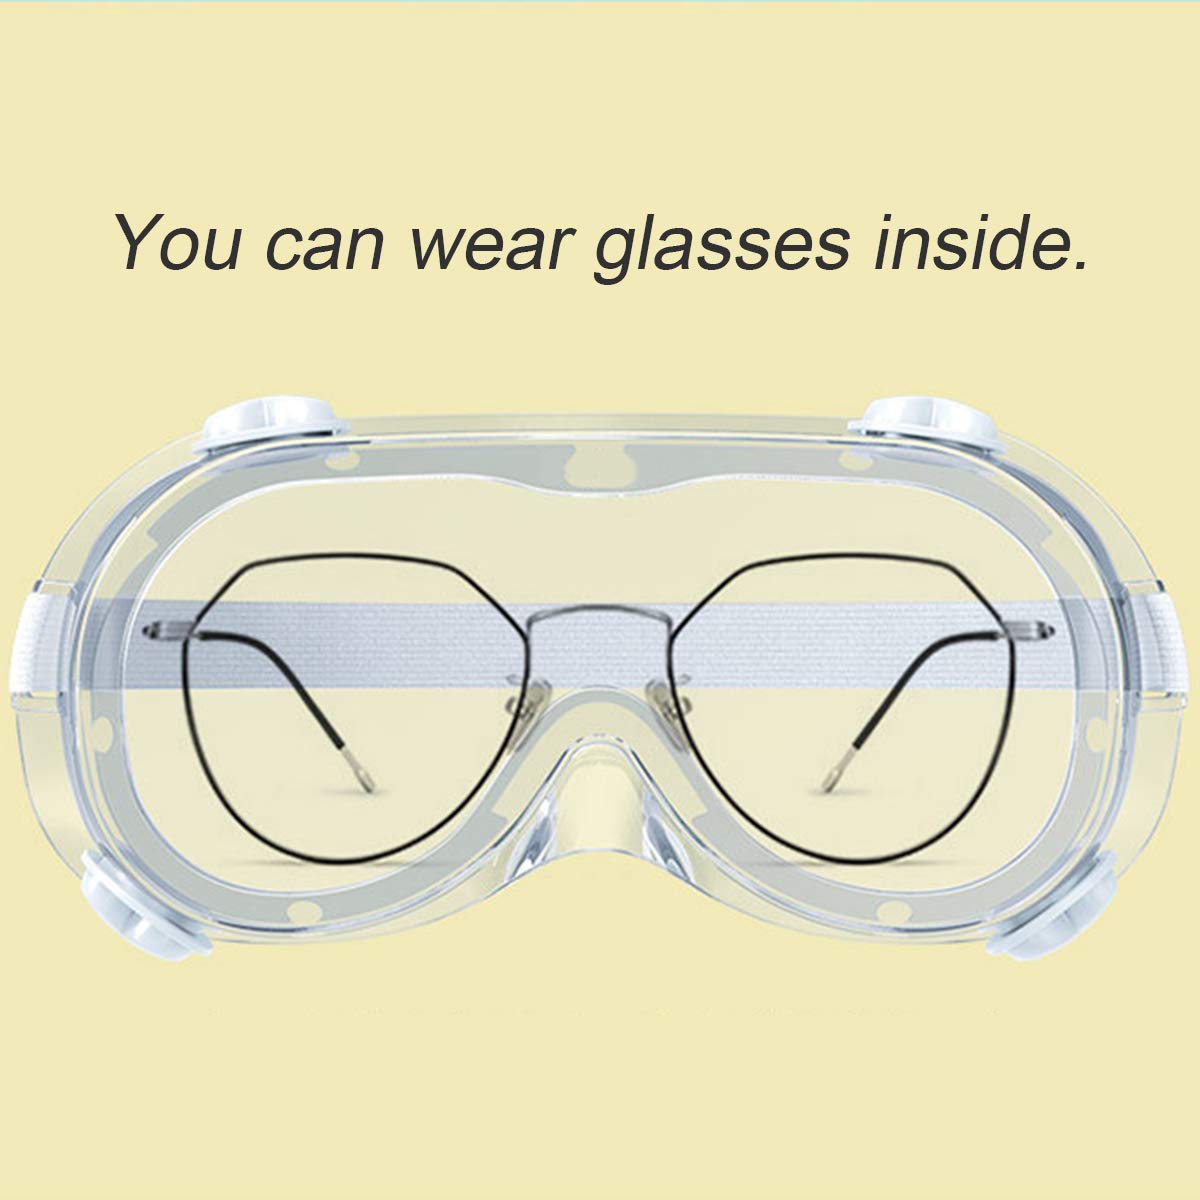 PVC-Transparent-Anti-Fog-Goggles-Dustproof-Splashing-Impact-Resistant-Glasses-Safety-Salivaproof-Gog-1688629-4